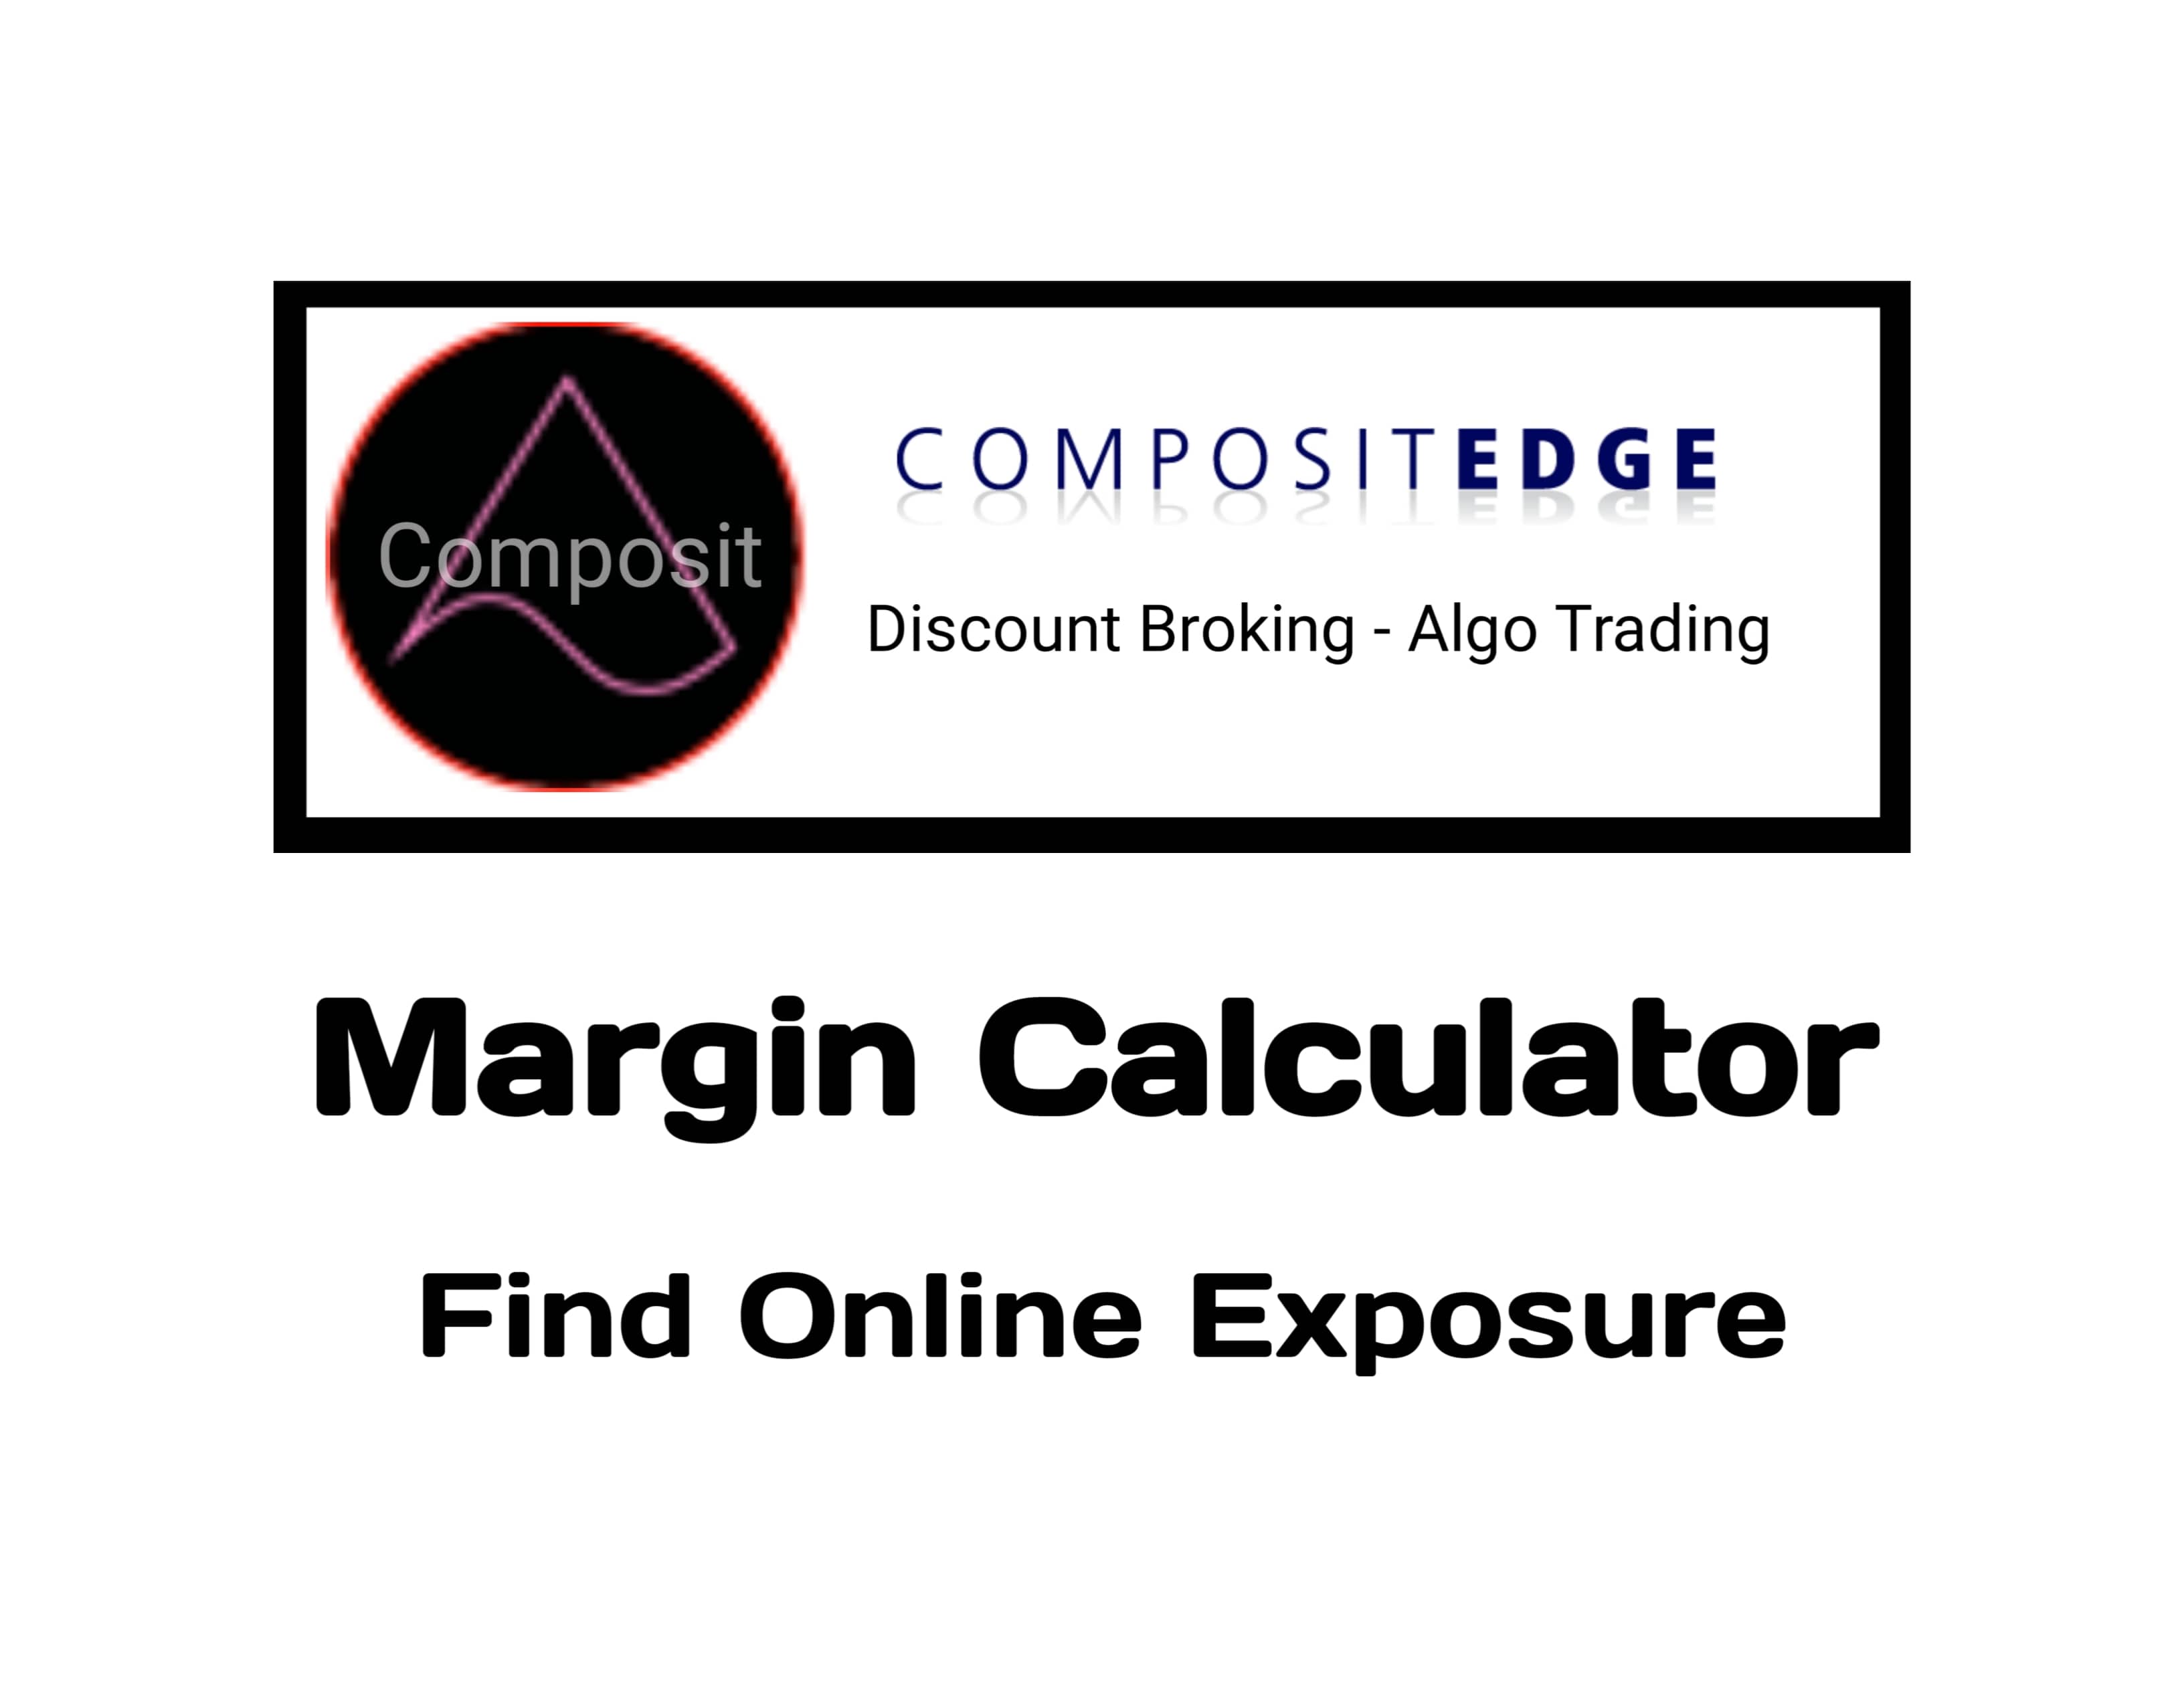 Composit Edge Margin Calculator